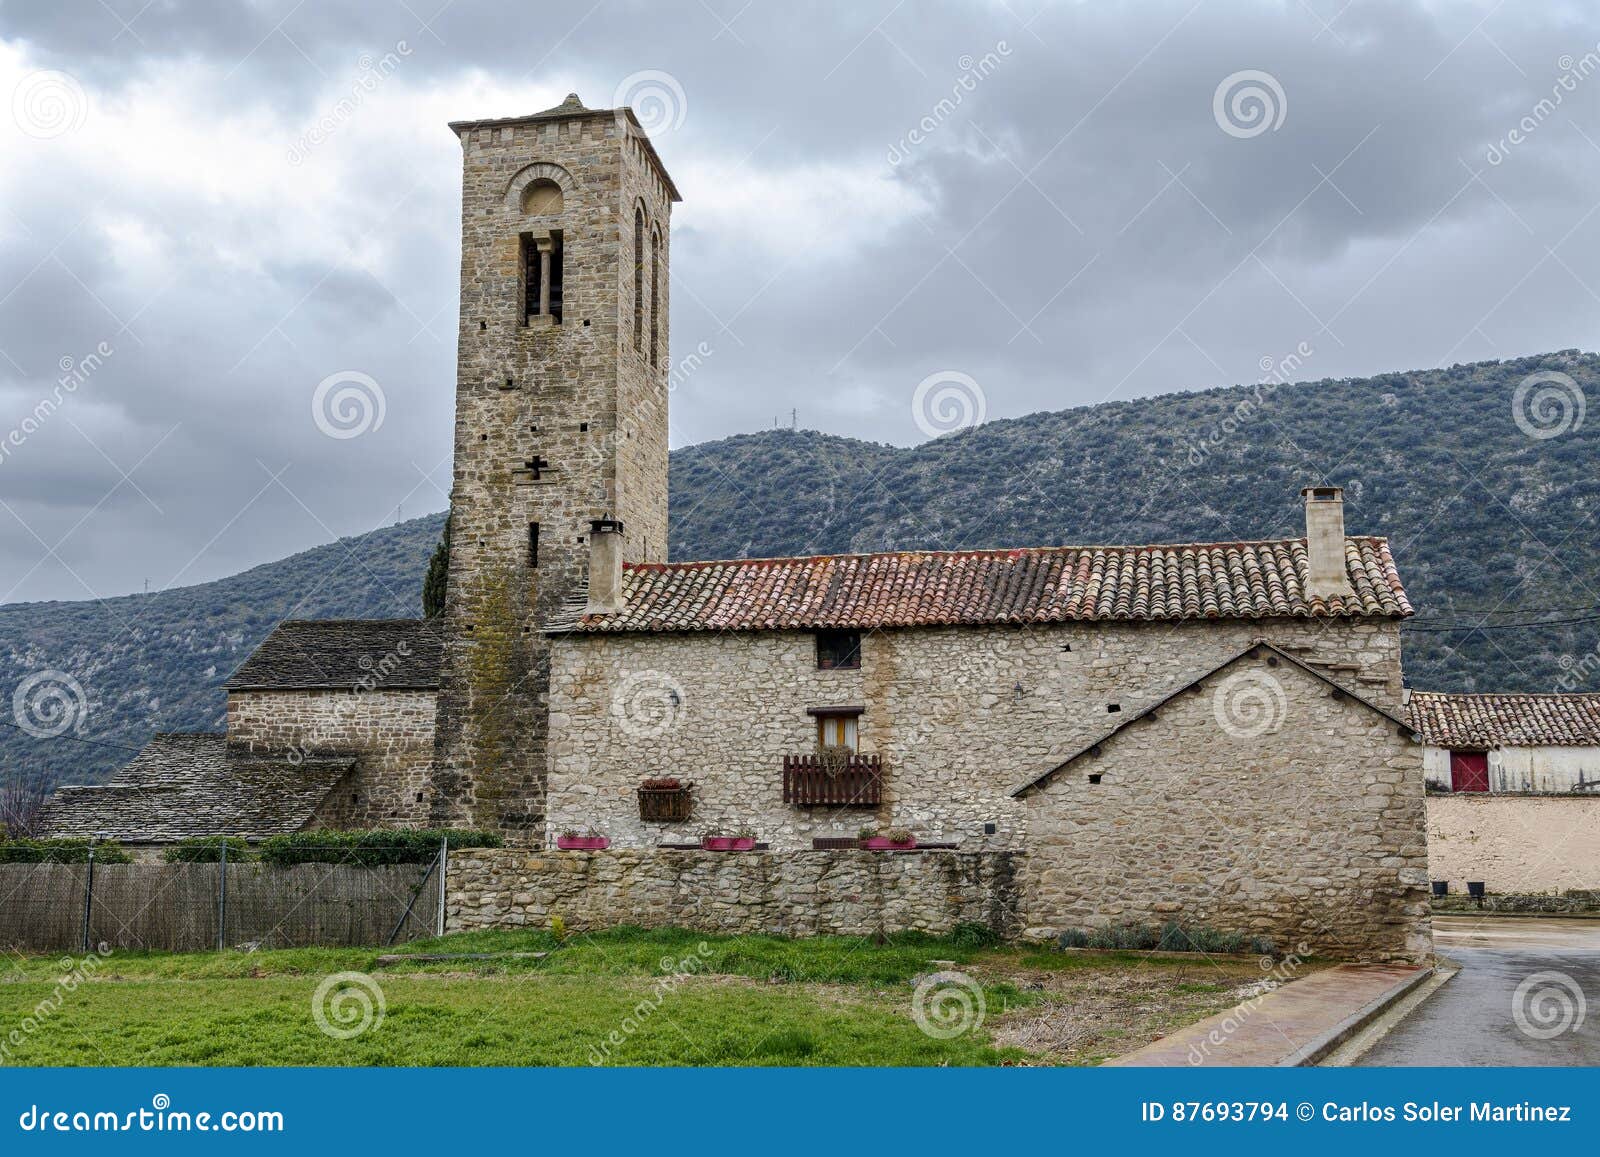 virgen del rosario church in the rural town of triste , spain